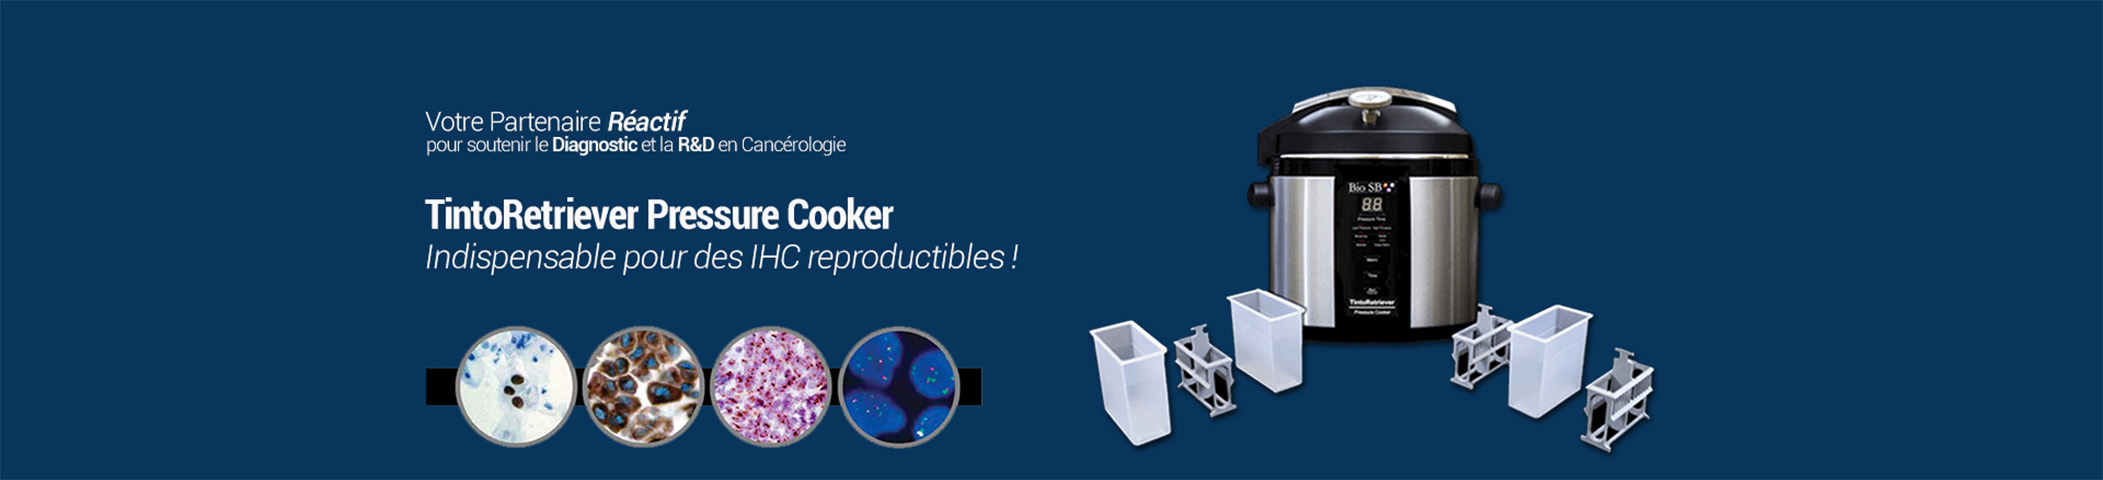 tintoretriver-pressure-cooker